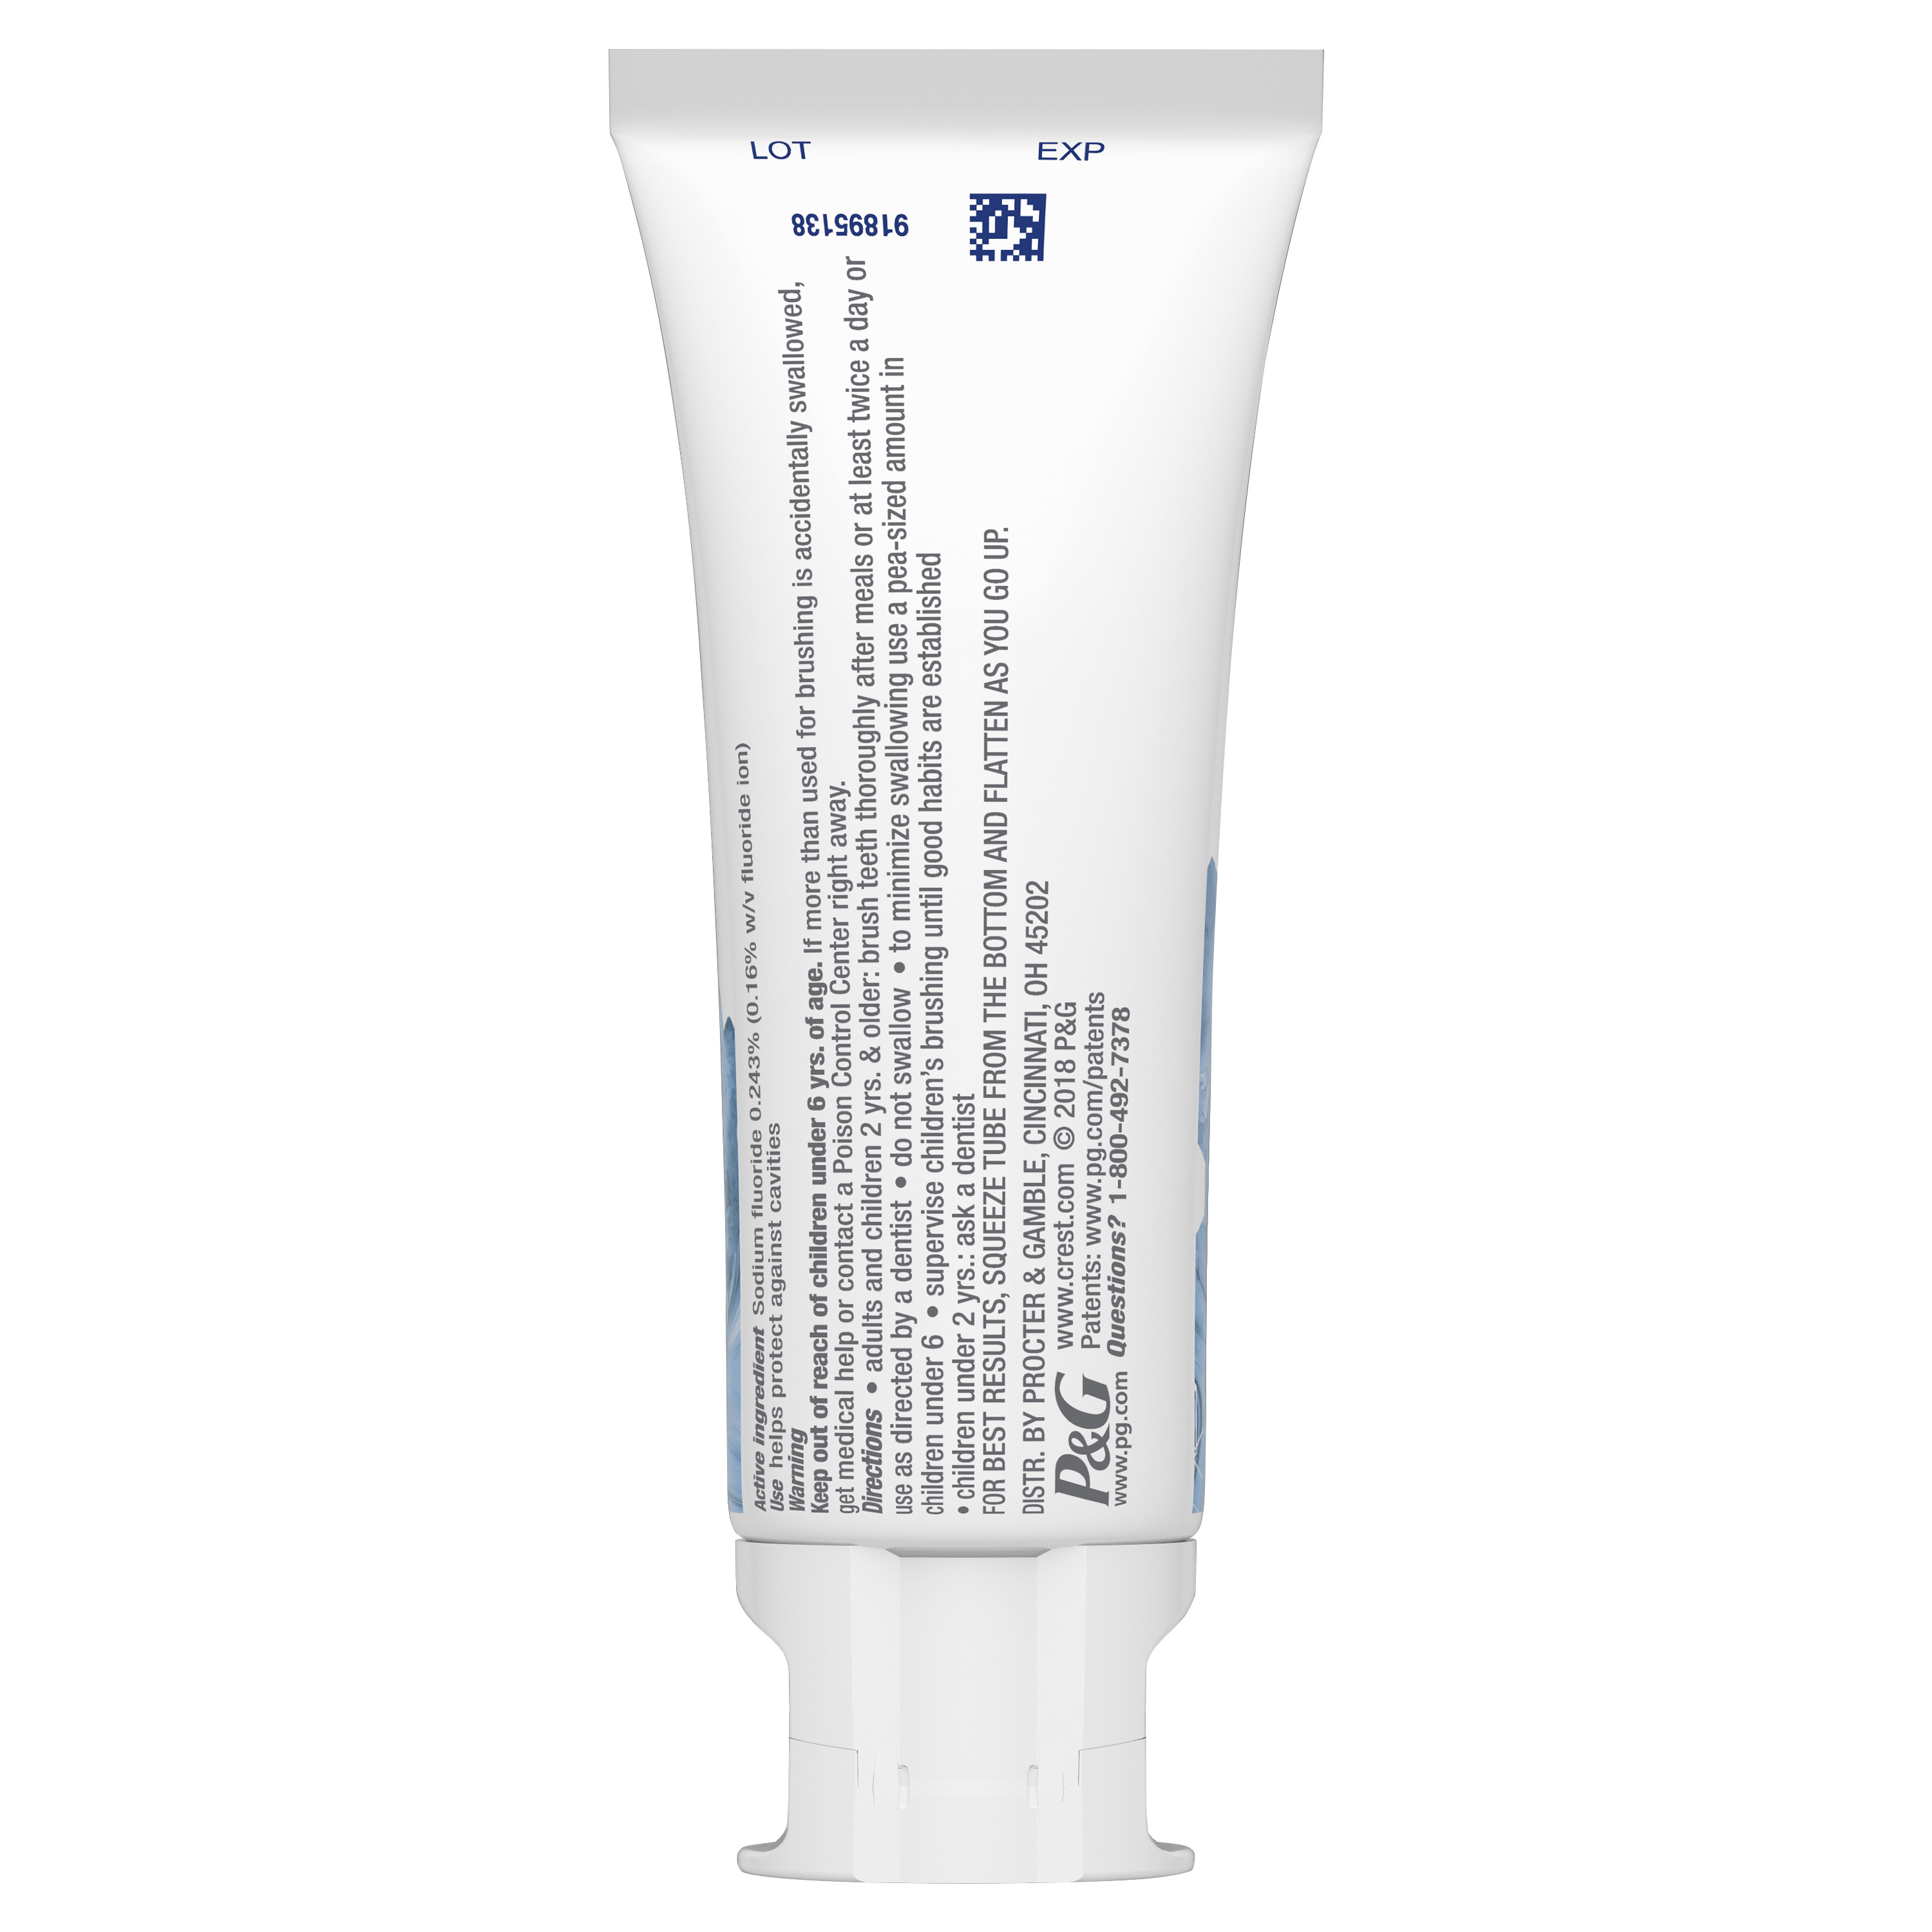 Crest 3D White Whitening Therapy Fluoride Toothpaste, Enamel, 4.1 oz - image 3 of 9